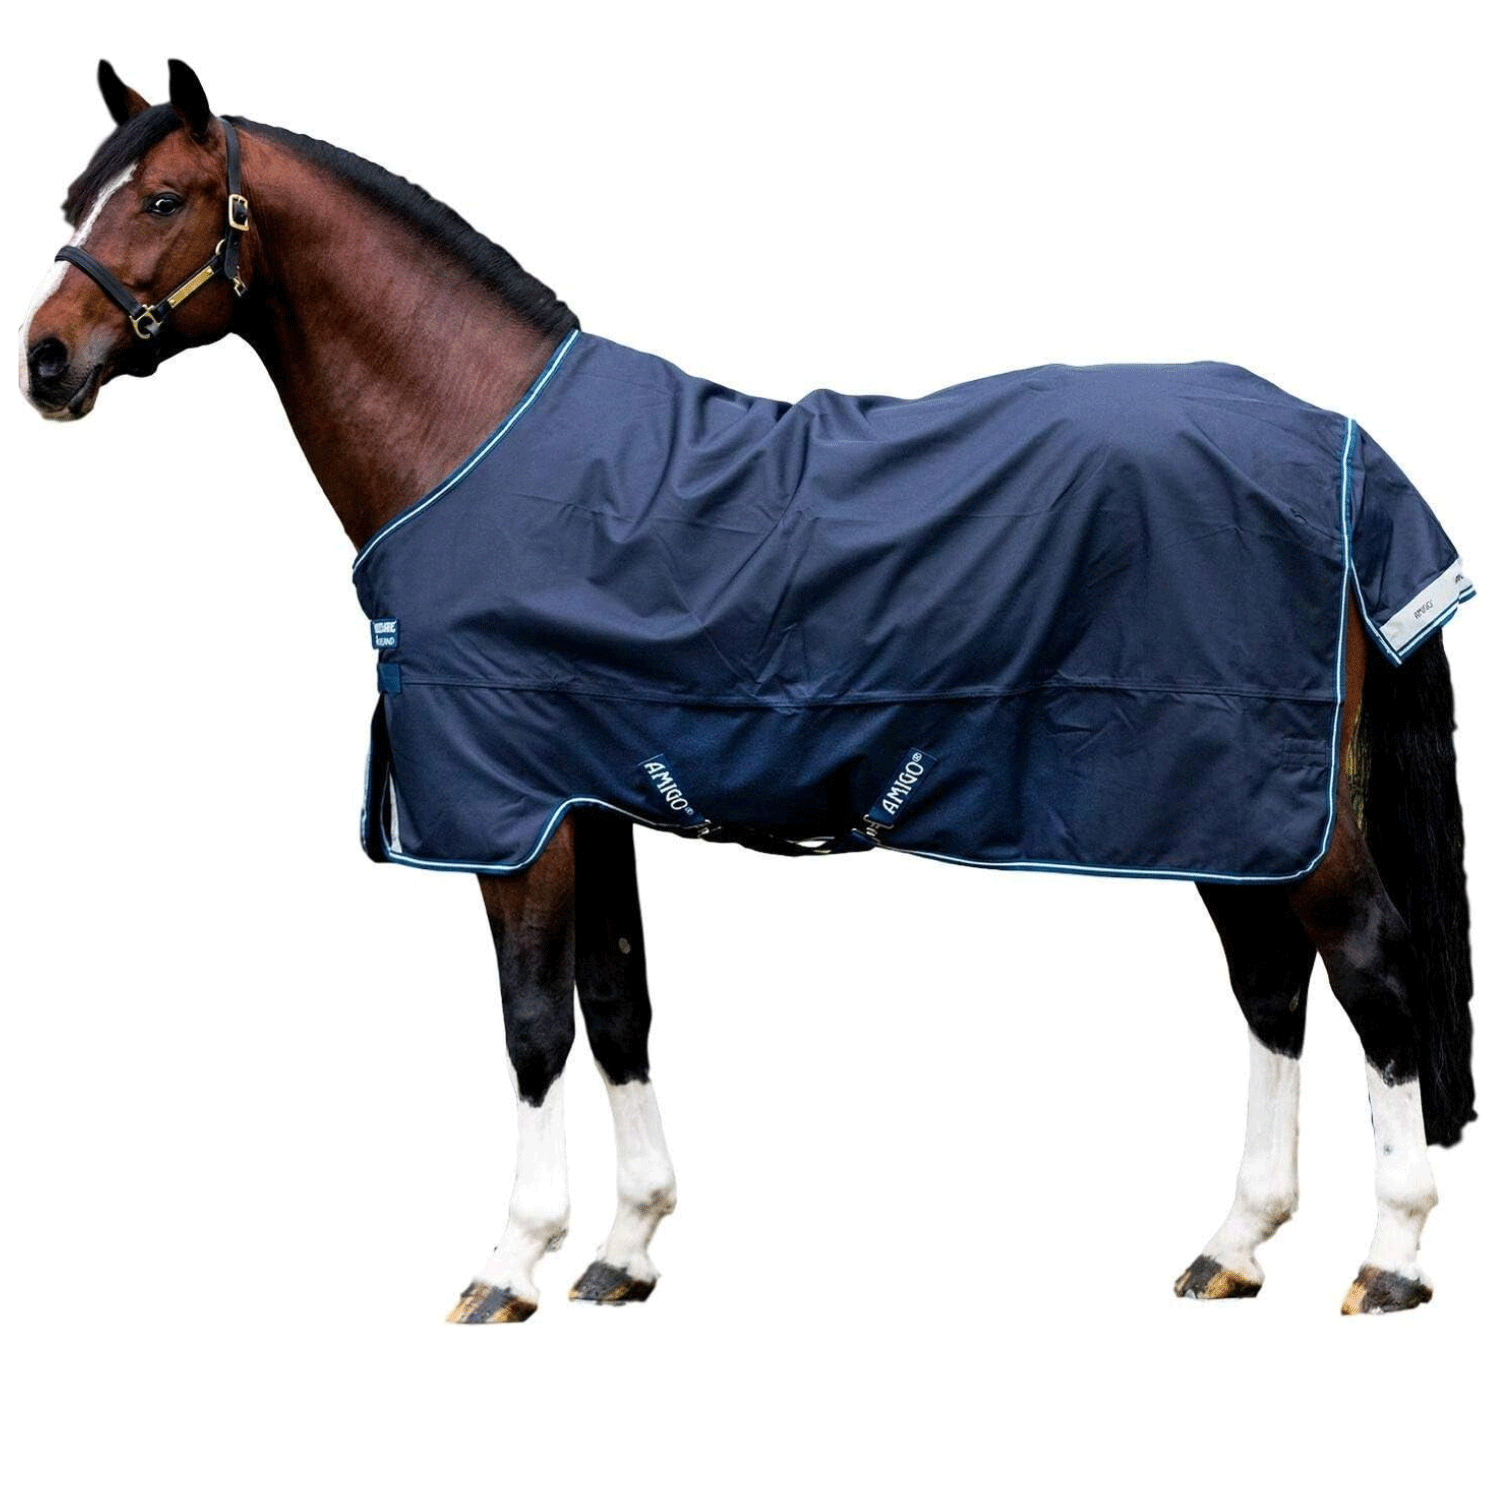 Ovation® High Neck Hi-Vis 1200D Turnout Blanket - 200G - The Lexington Horse